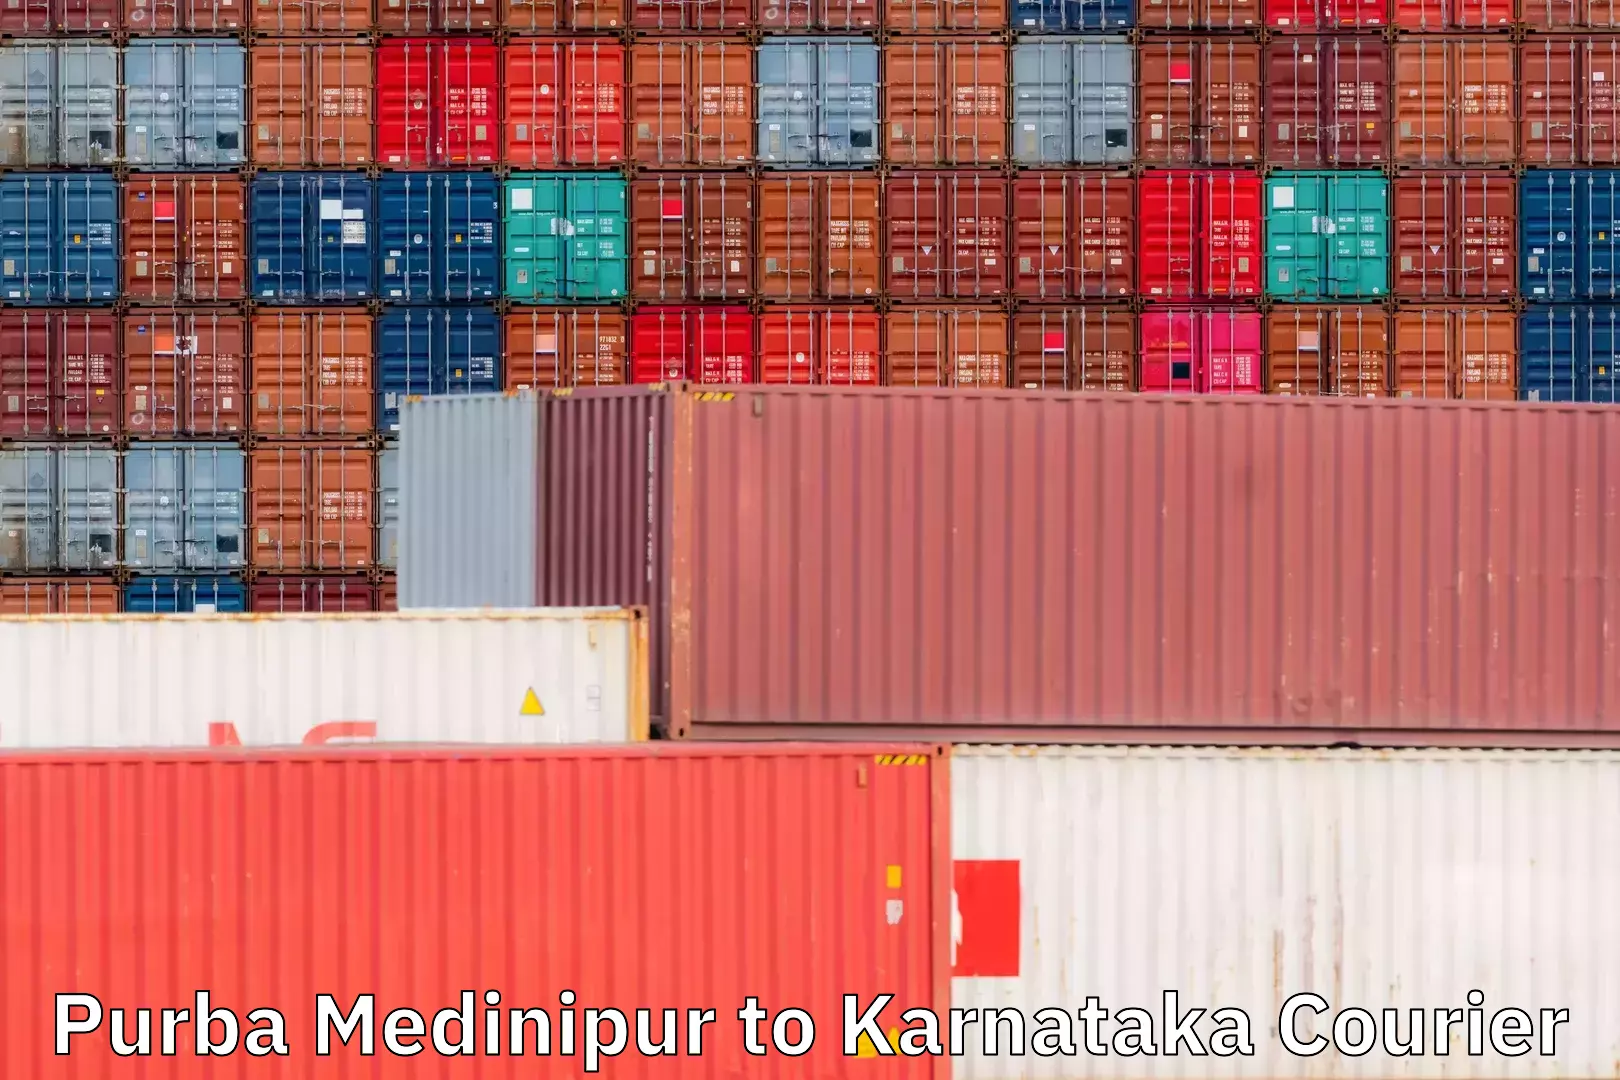 High-efficiency logistics in Purba Medinipur to Karnataka